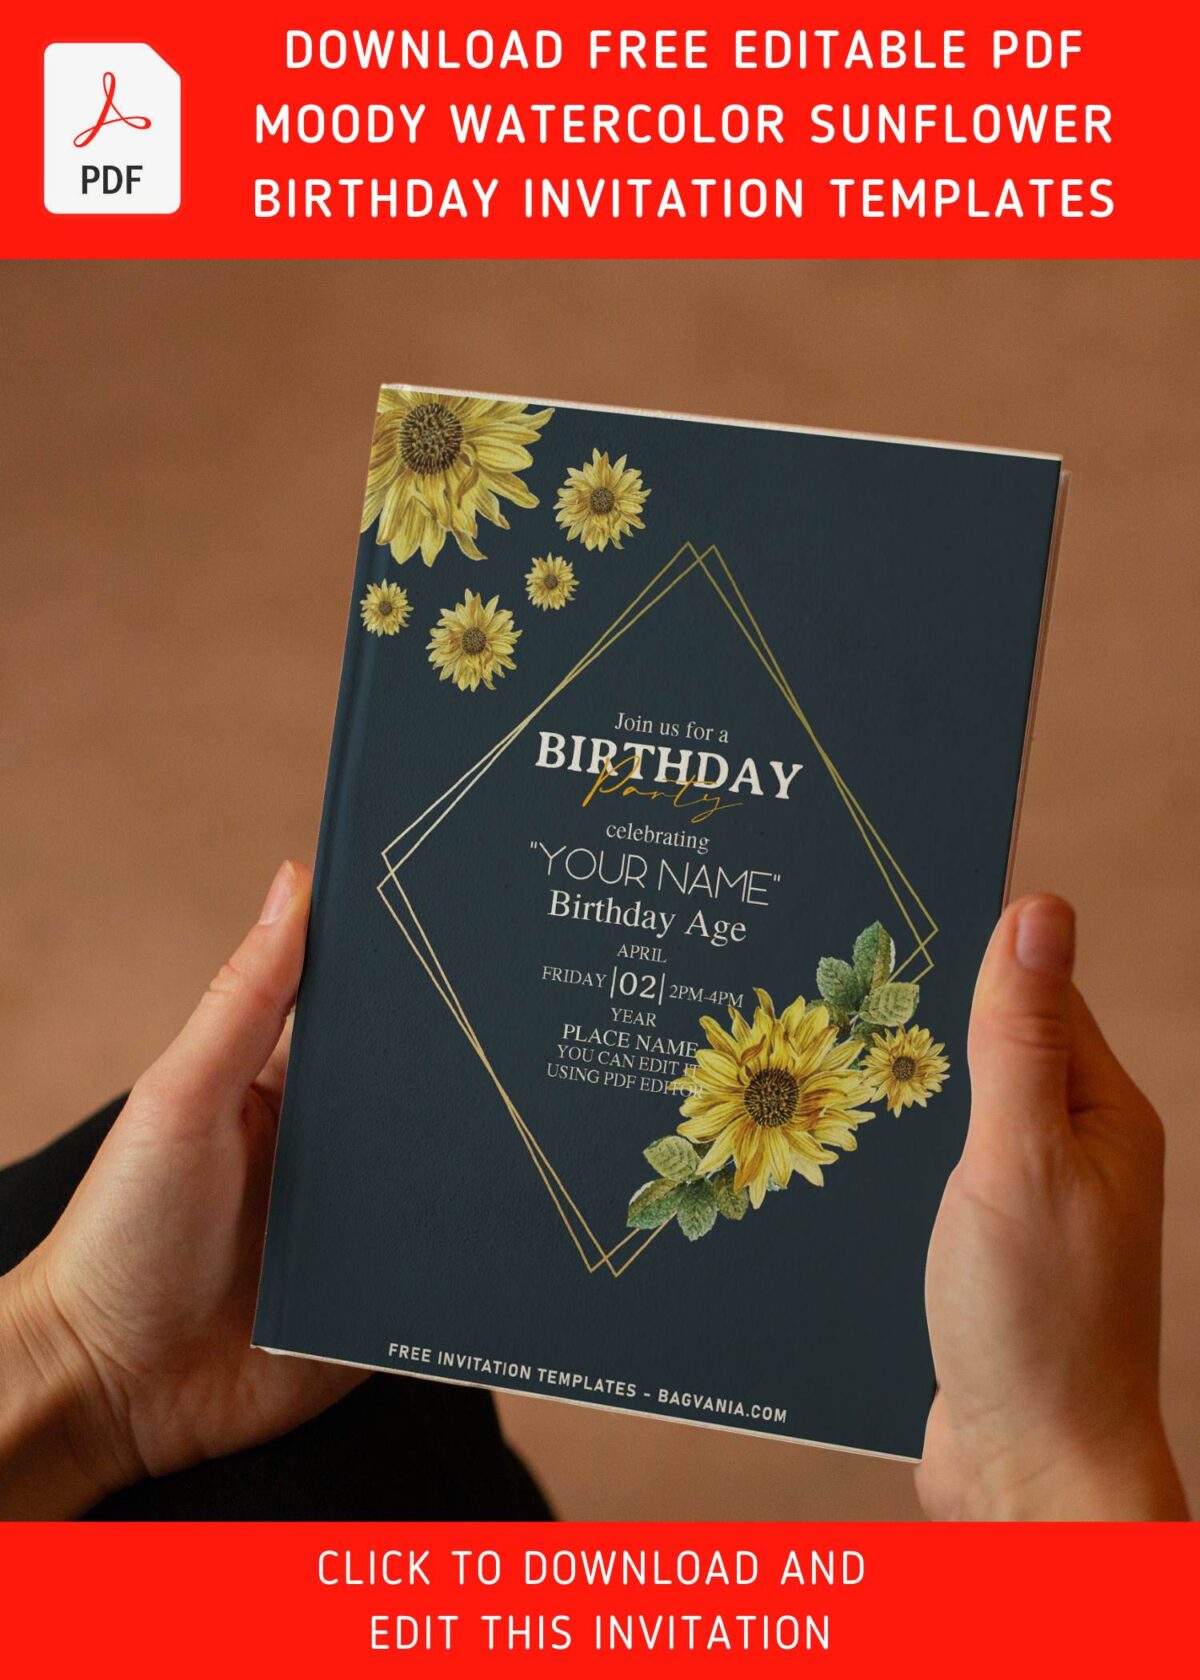 (Free Editable PDF) Moody Warm Summer Sunflower Invitation Templates with elegant scripts